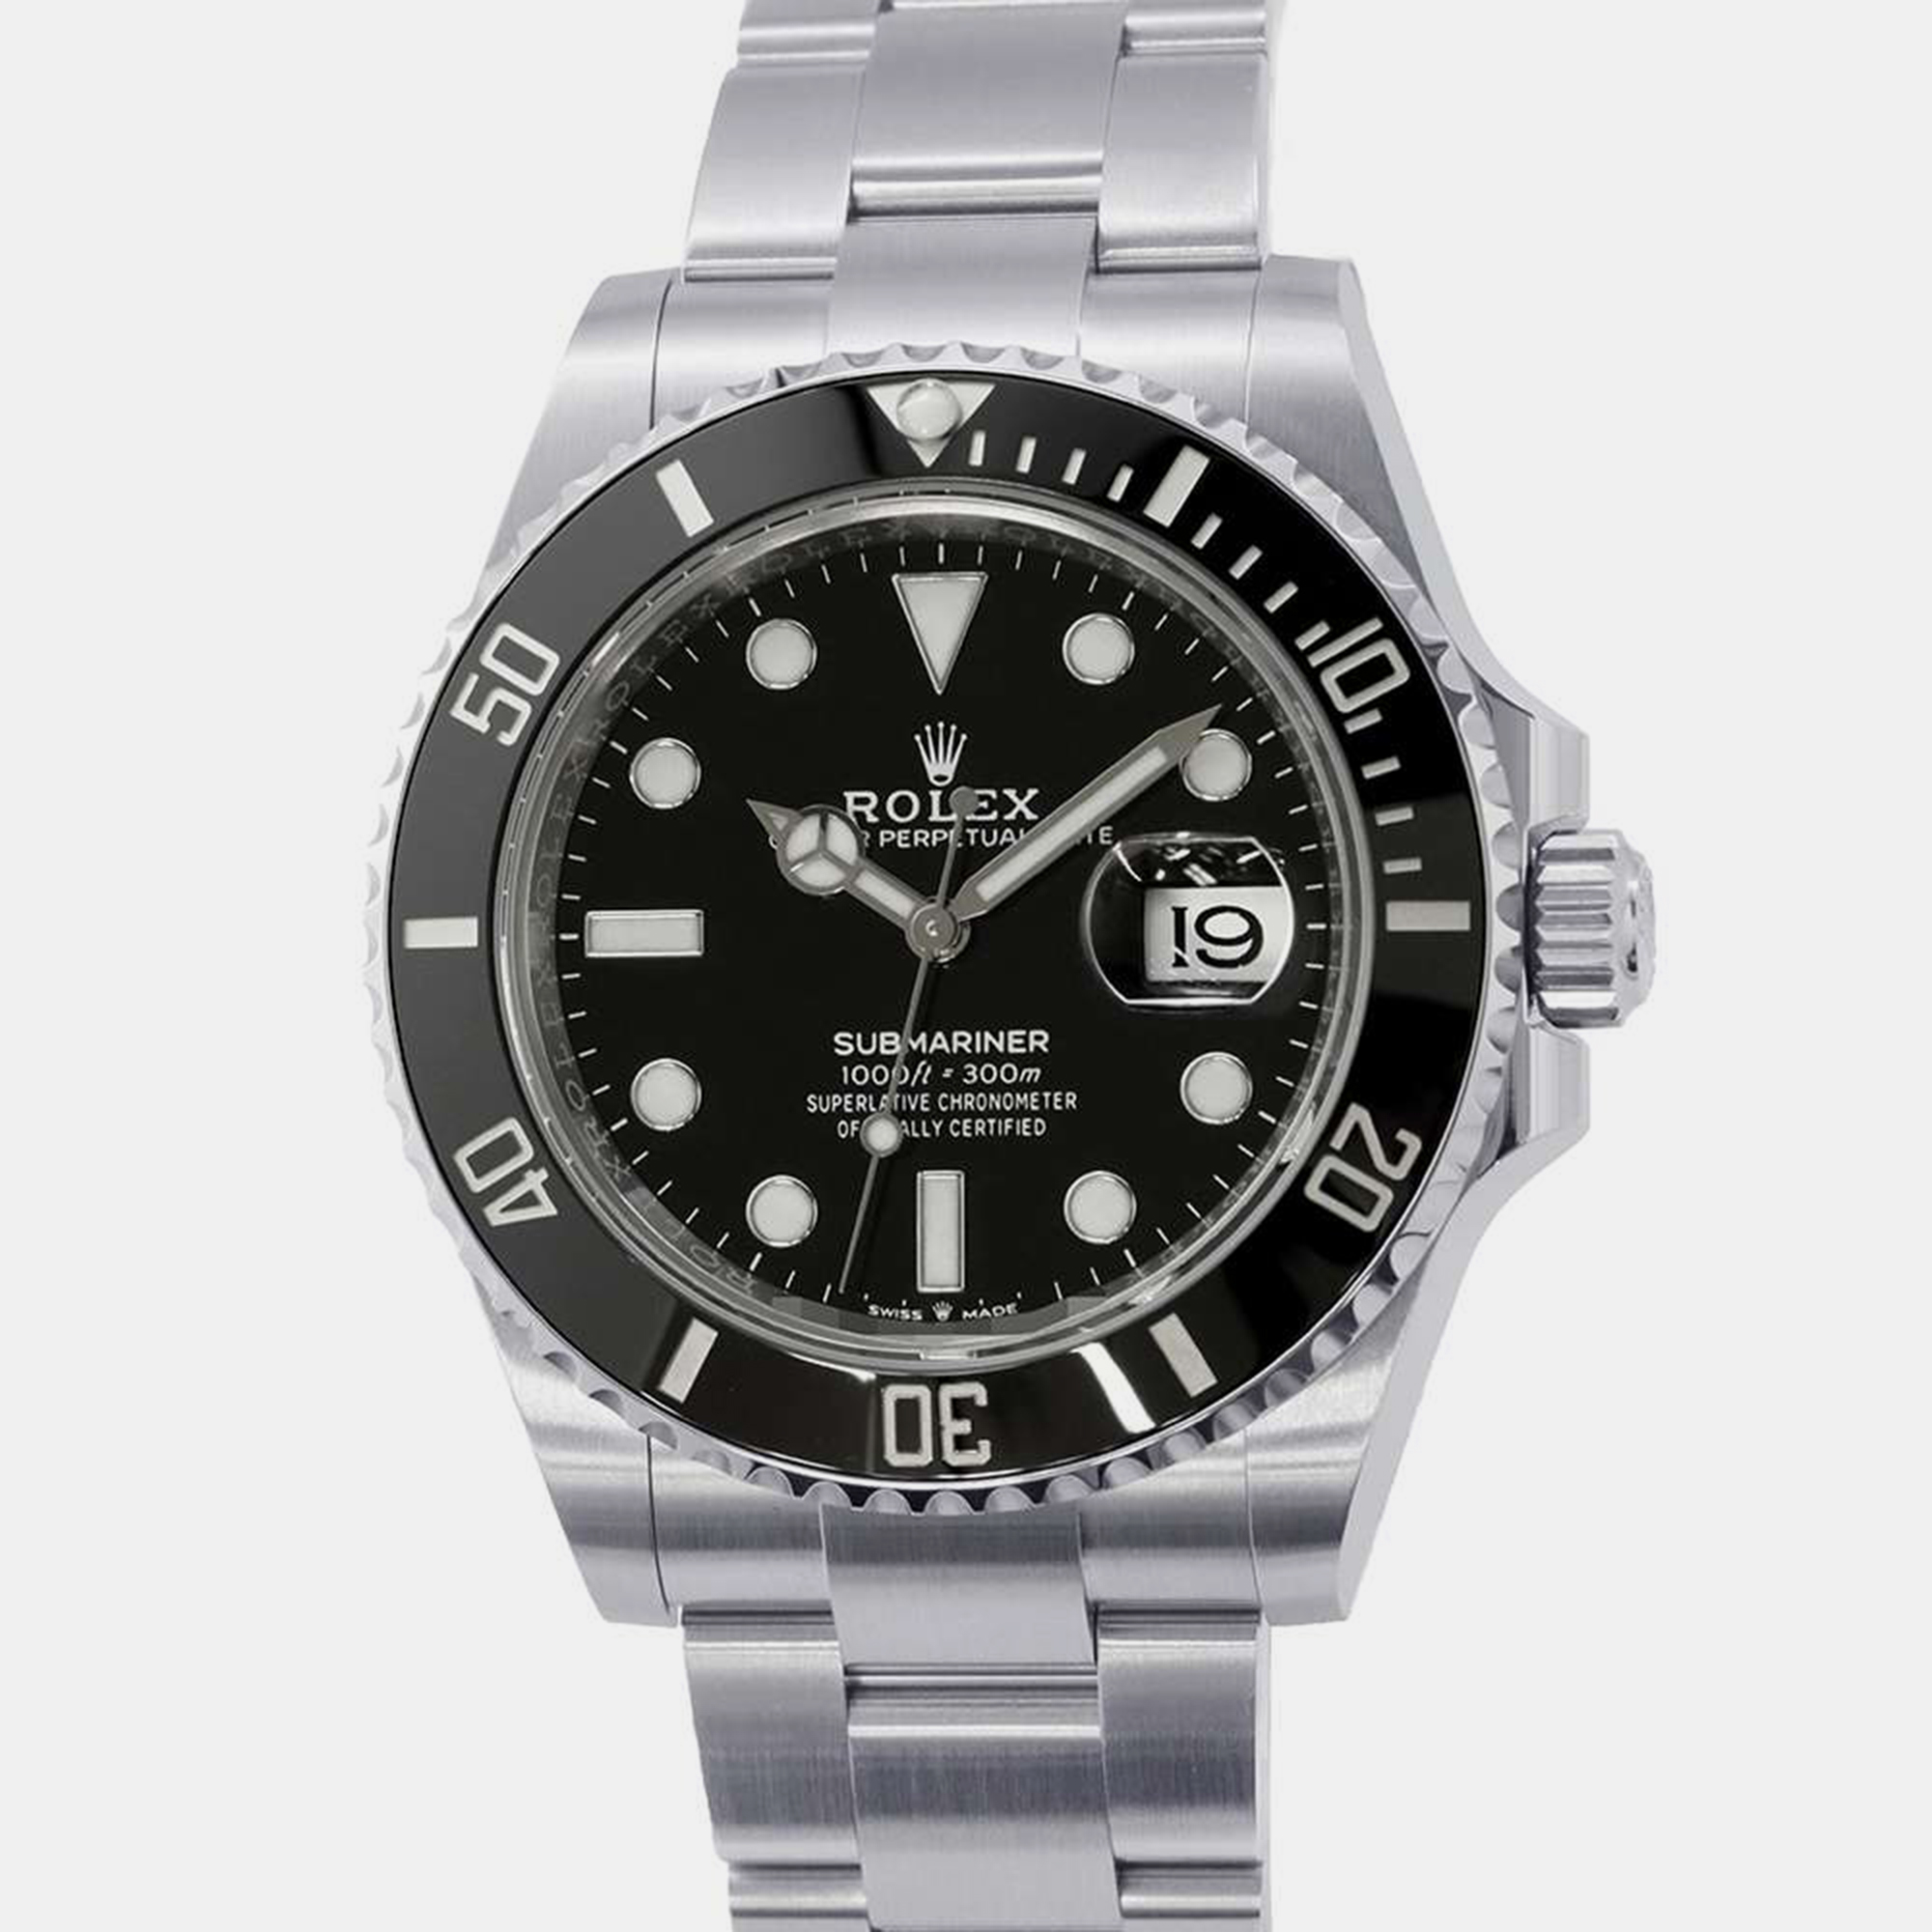 Rolex black stainless steel submariner 126610ln automatic men's wristwatch 41 mm